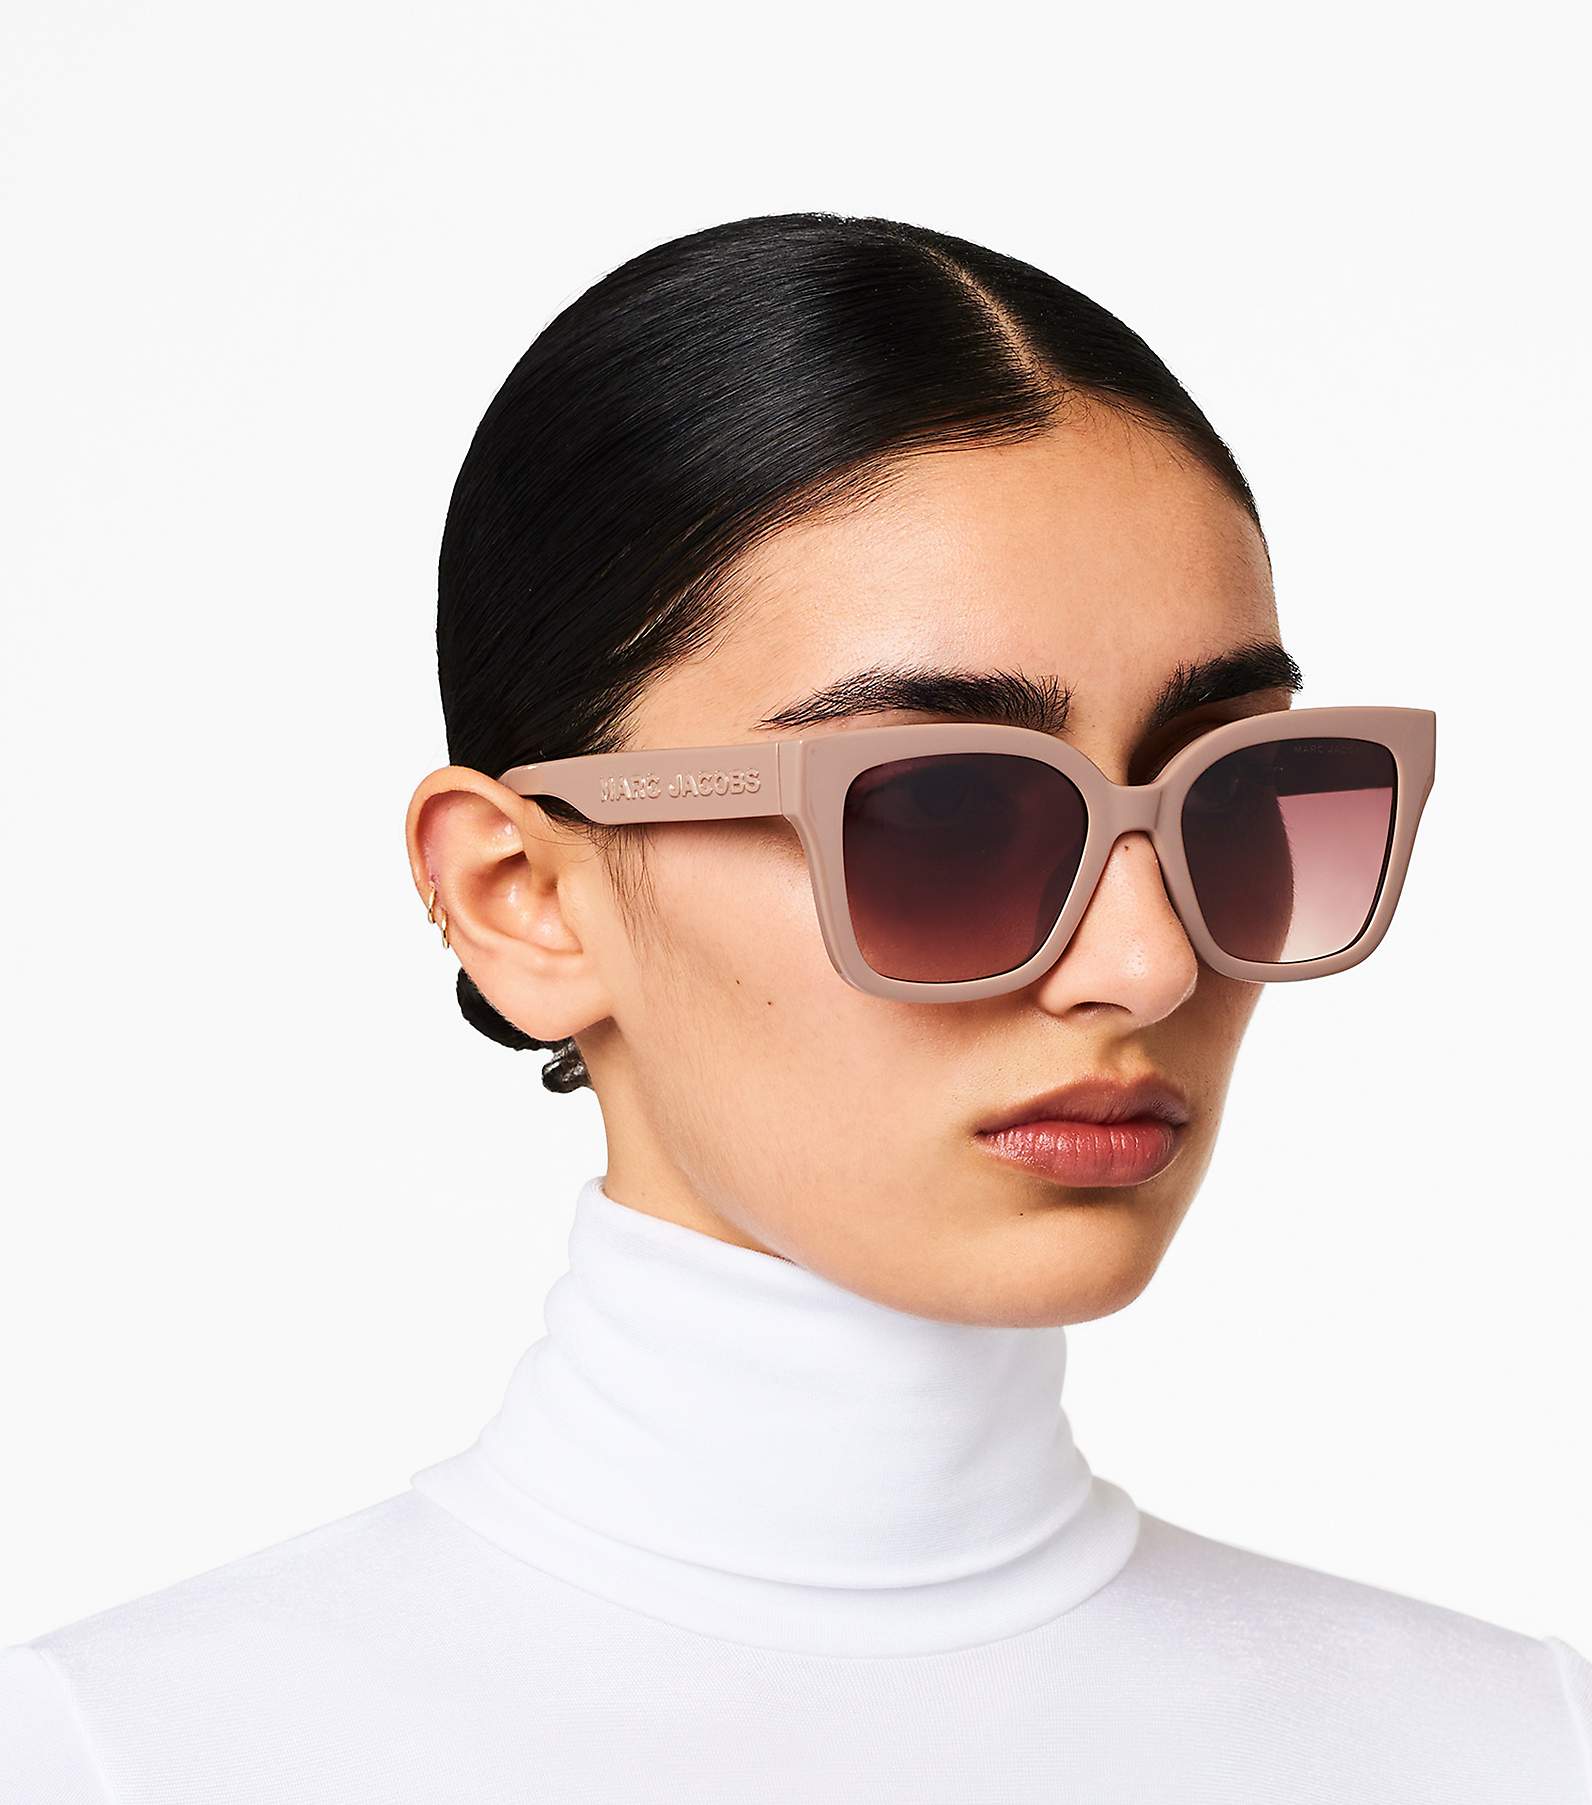 Marc Jacobs Sunglasses For Women